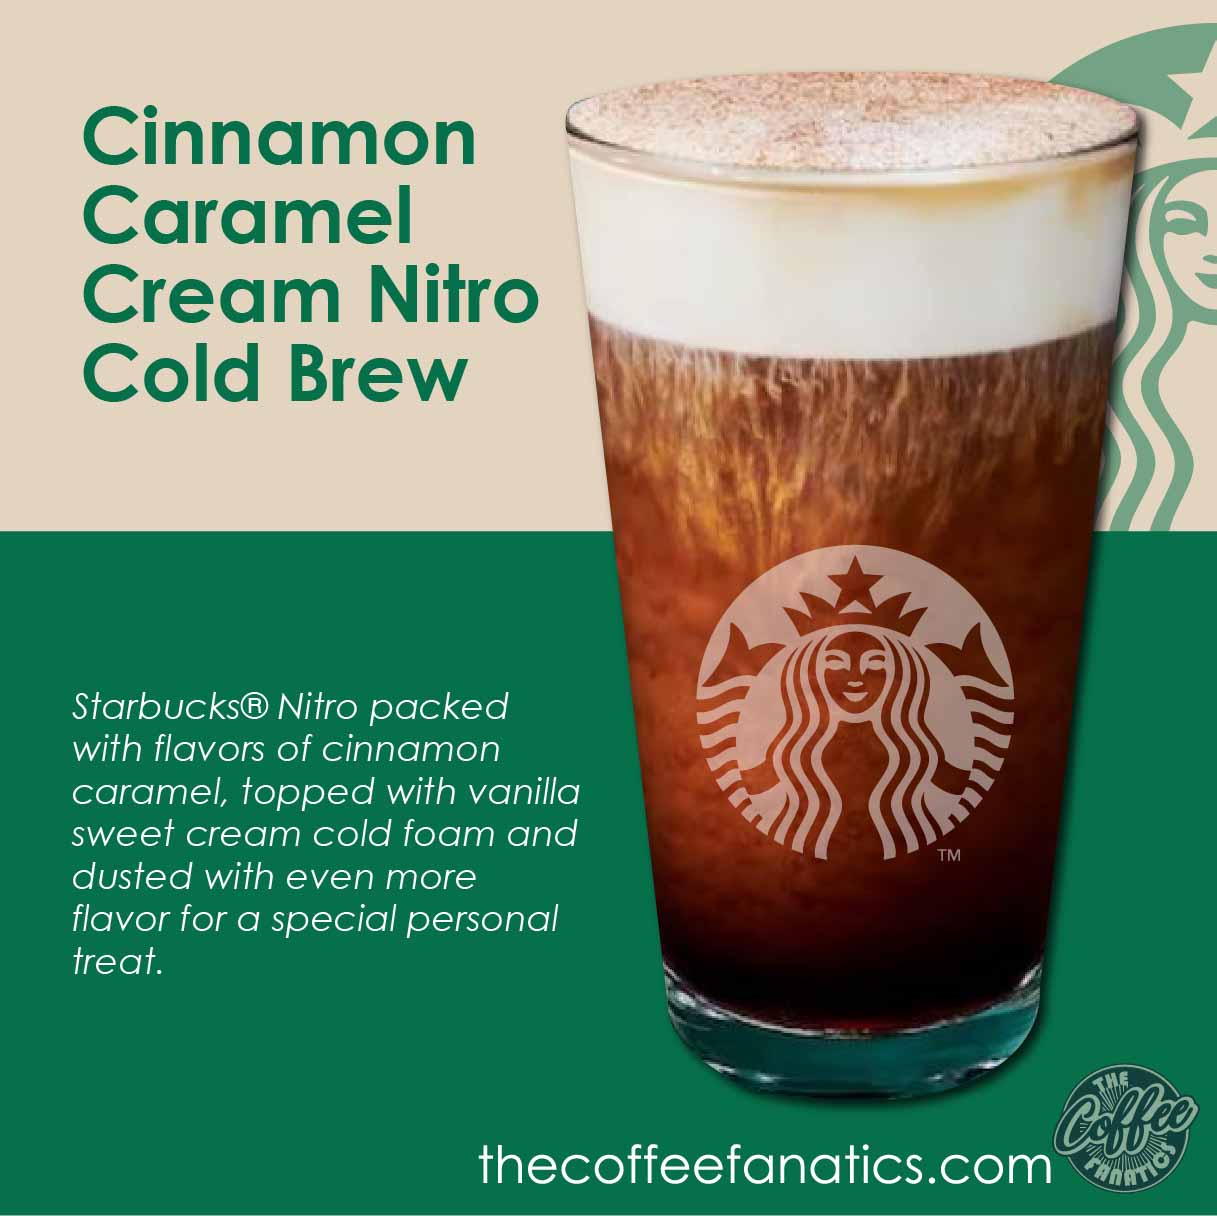 We Tried the New Starbucks Cinnamon Caramel Cream Nitro Cold Brew